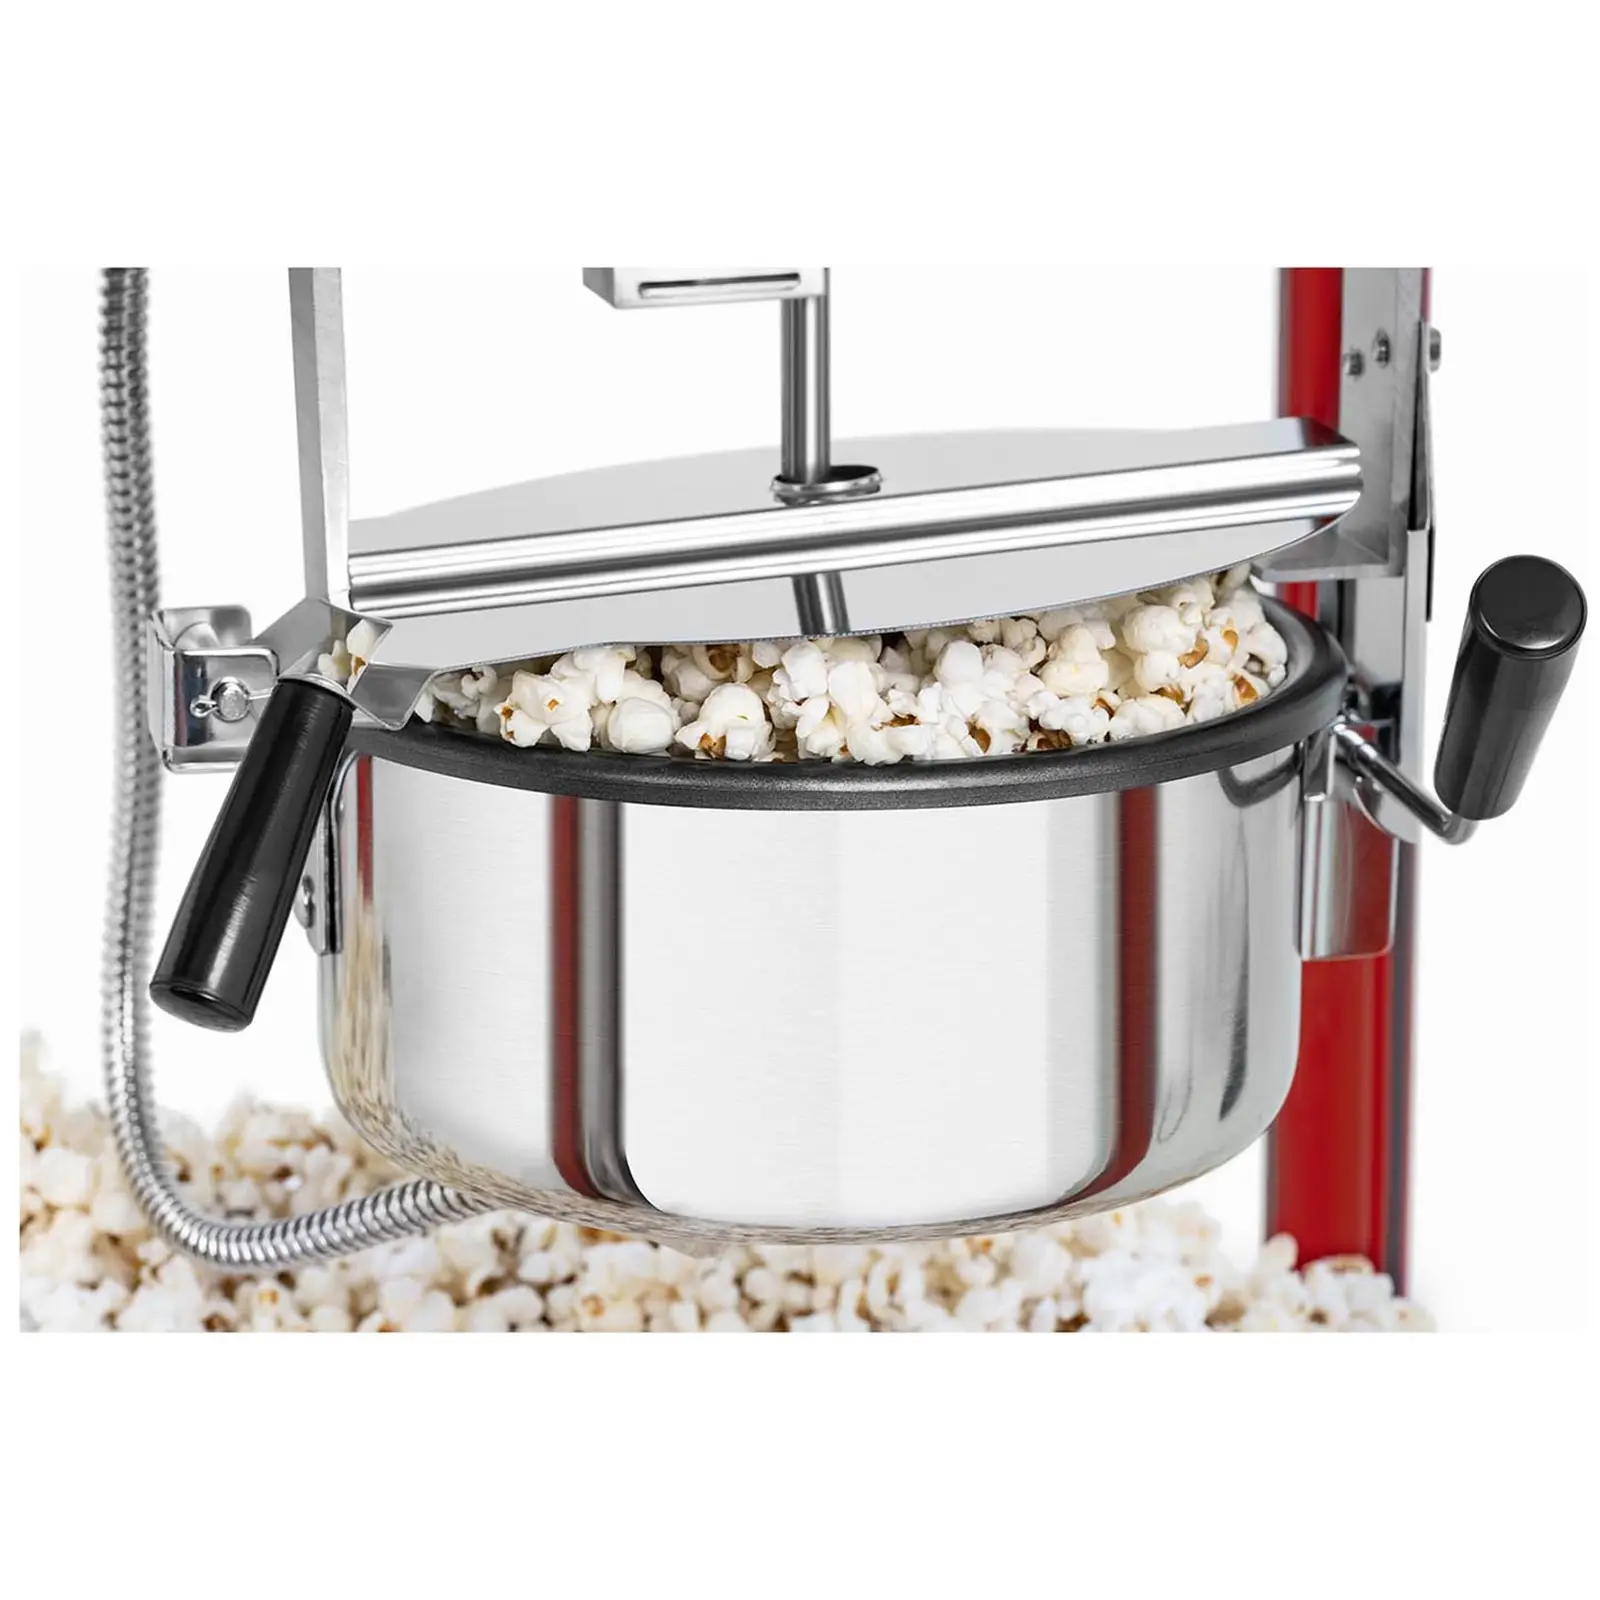 Popcornmaskin - Amerikansk design